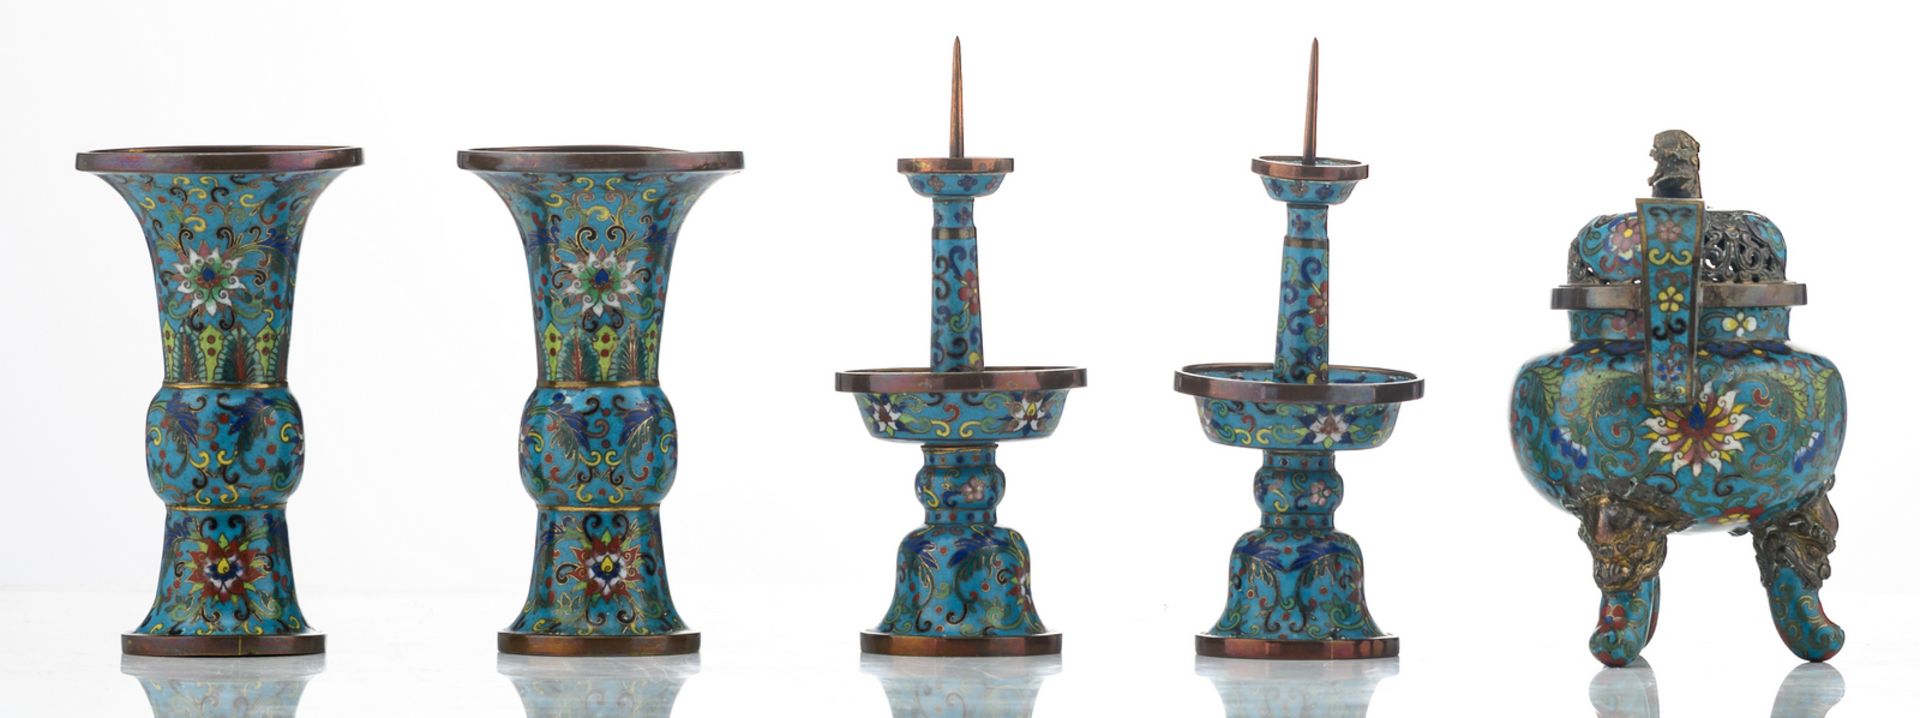 A miniature set of Chinese cloisonné enamel vases, candle sticks and an incense burner, 19thC, H - Bild 2 aus 6